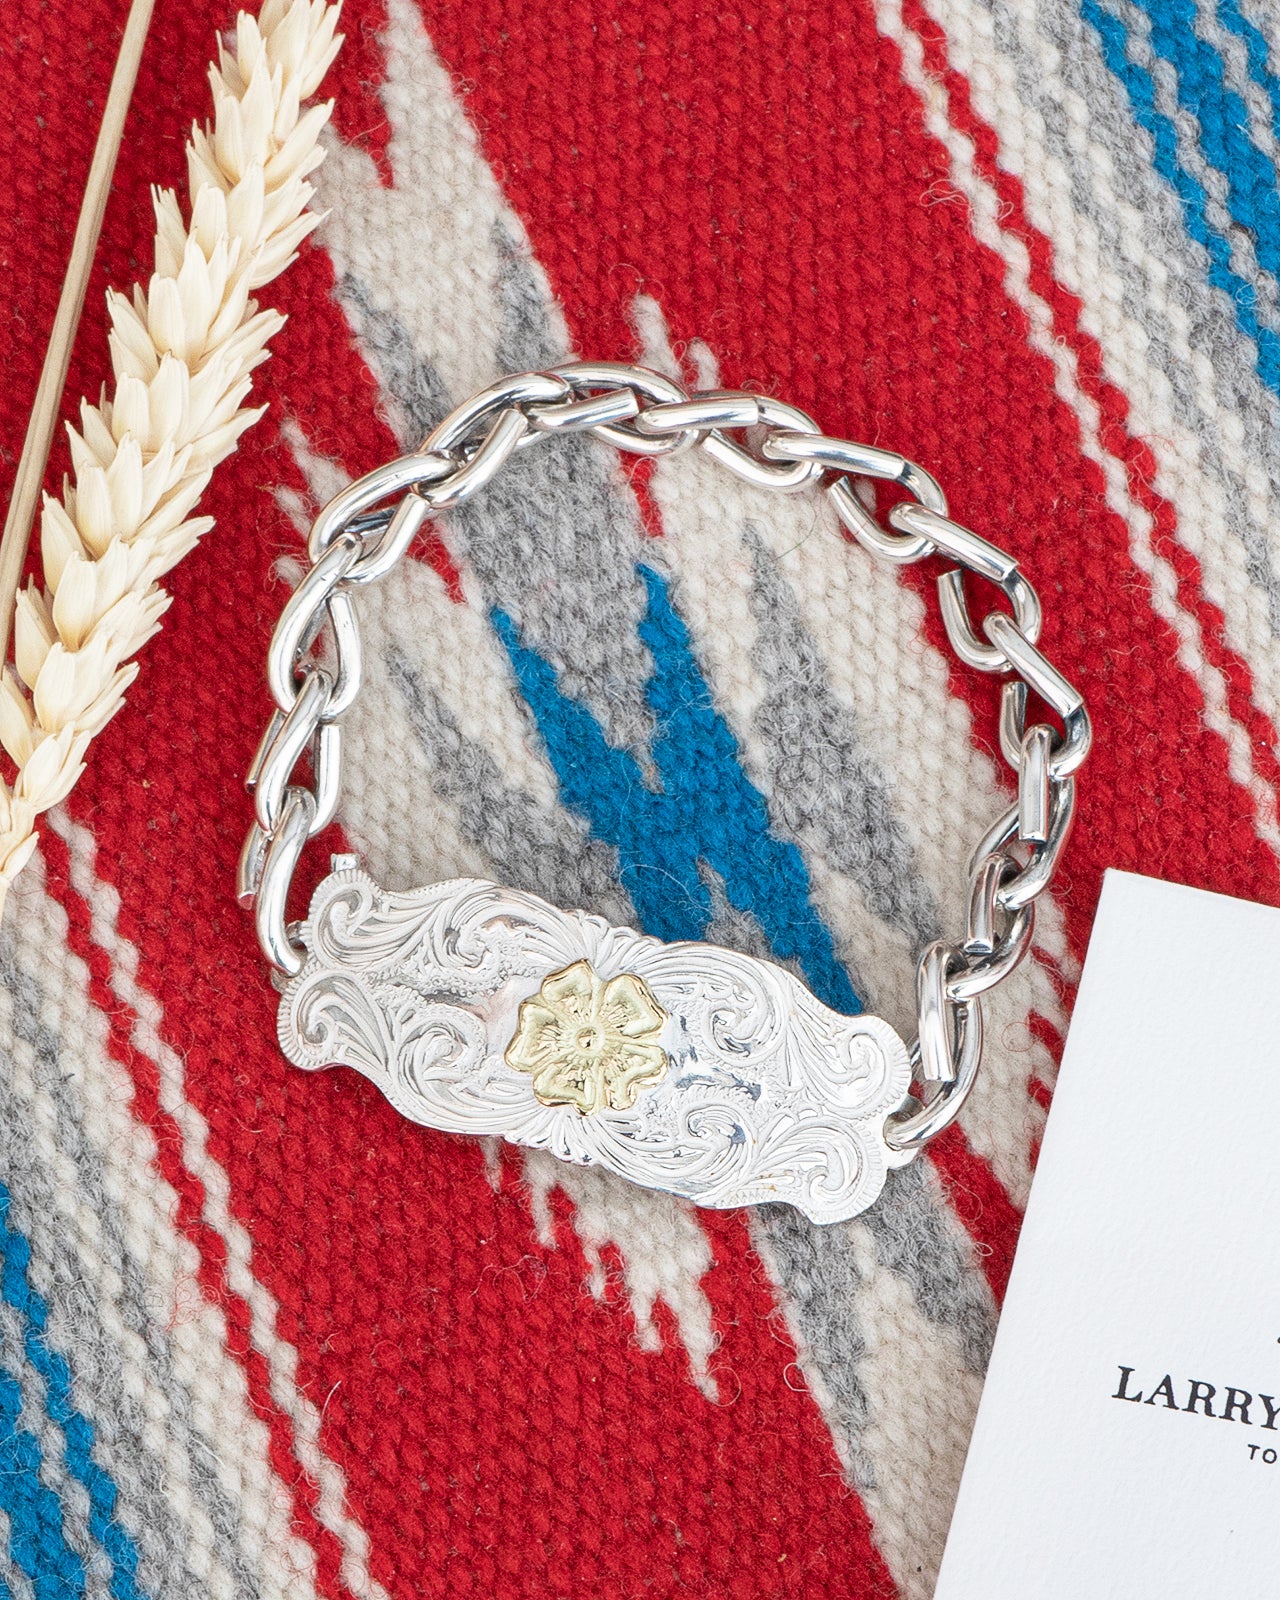 Larry Smith Karakusa Rose Chain Bracelet